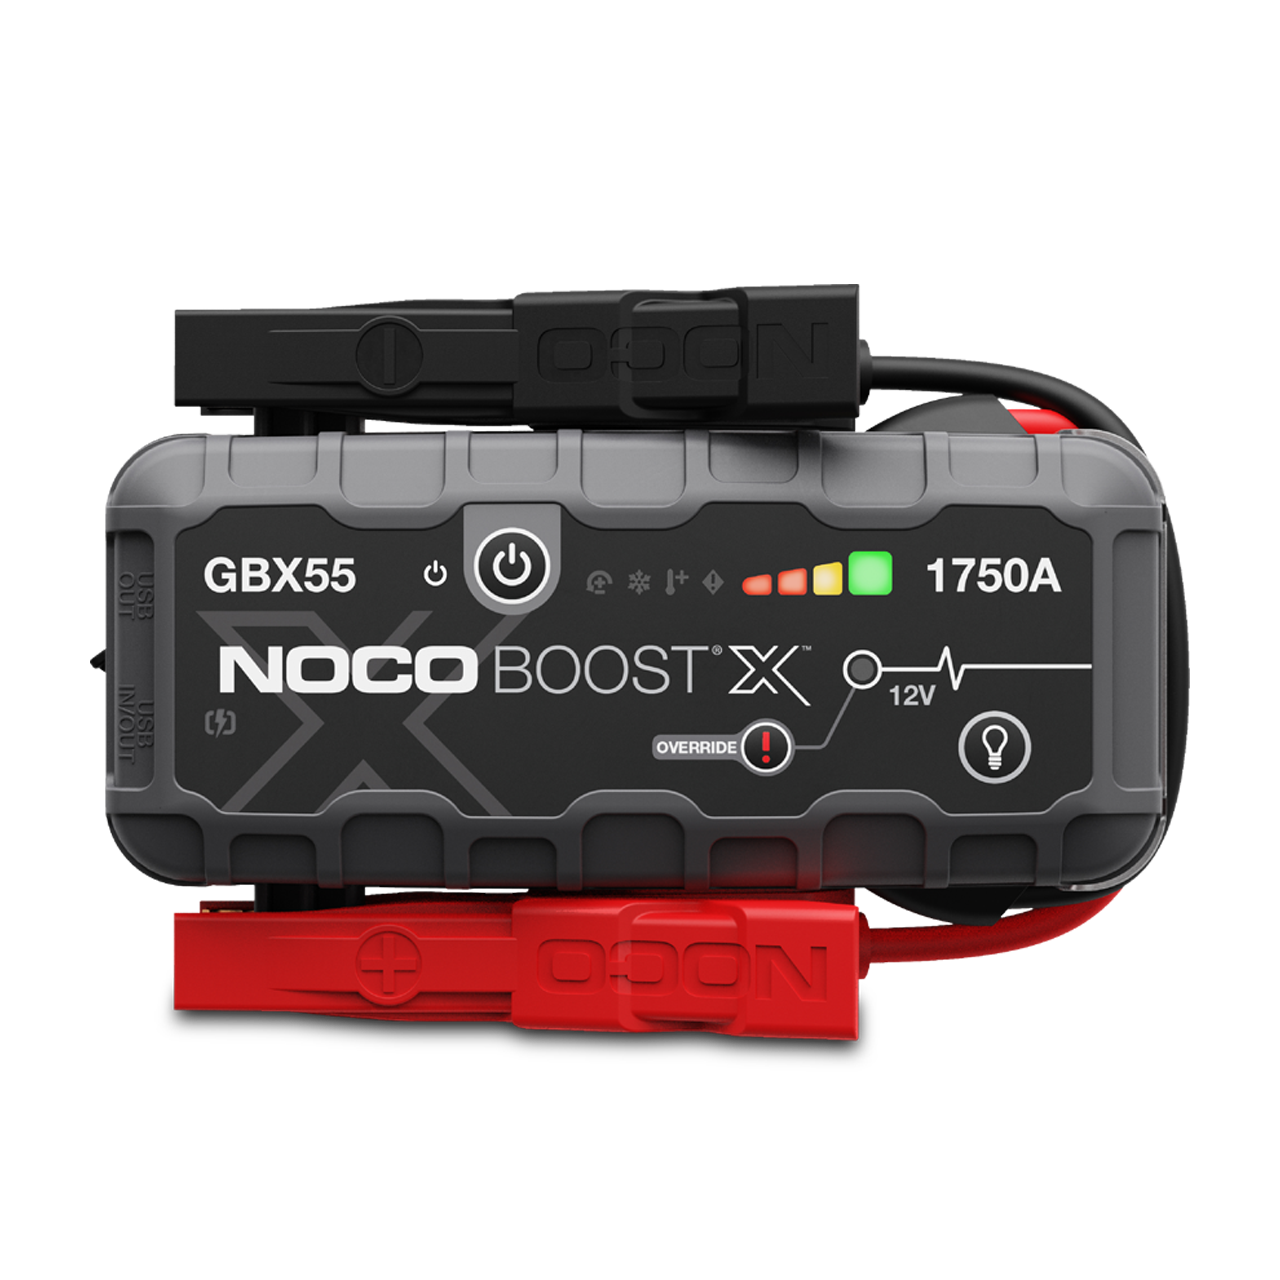 Starthilfe NOCO Boost X GBX55 1750A 12V - Jetzt 16% Ersparnis